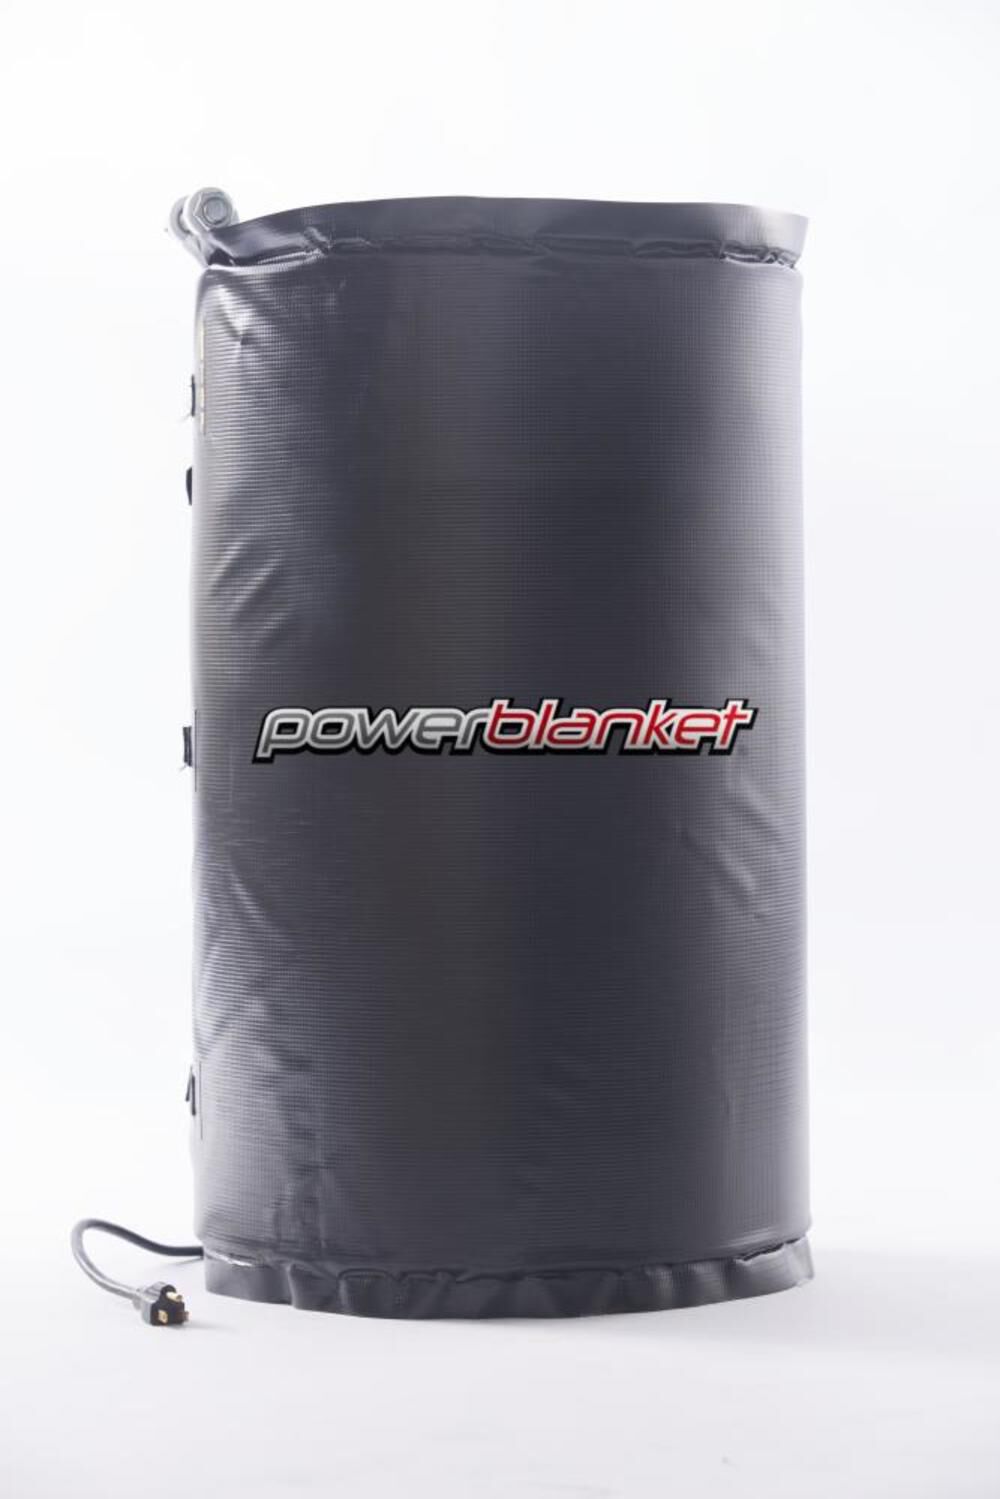 15 gallon90 Electric Drum Heater BH15RR